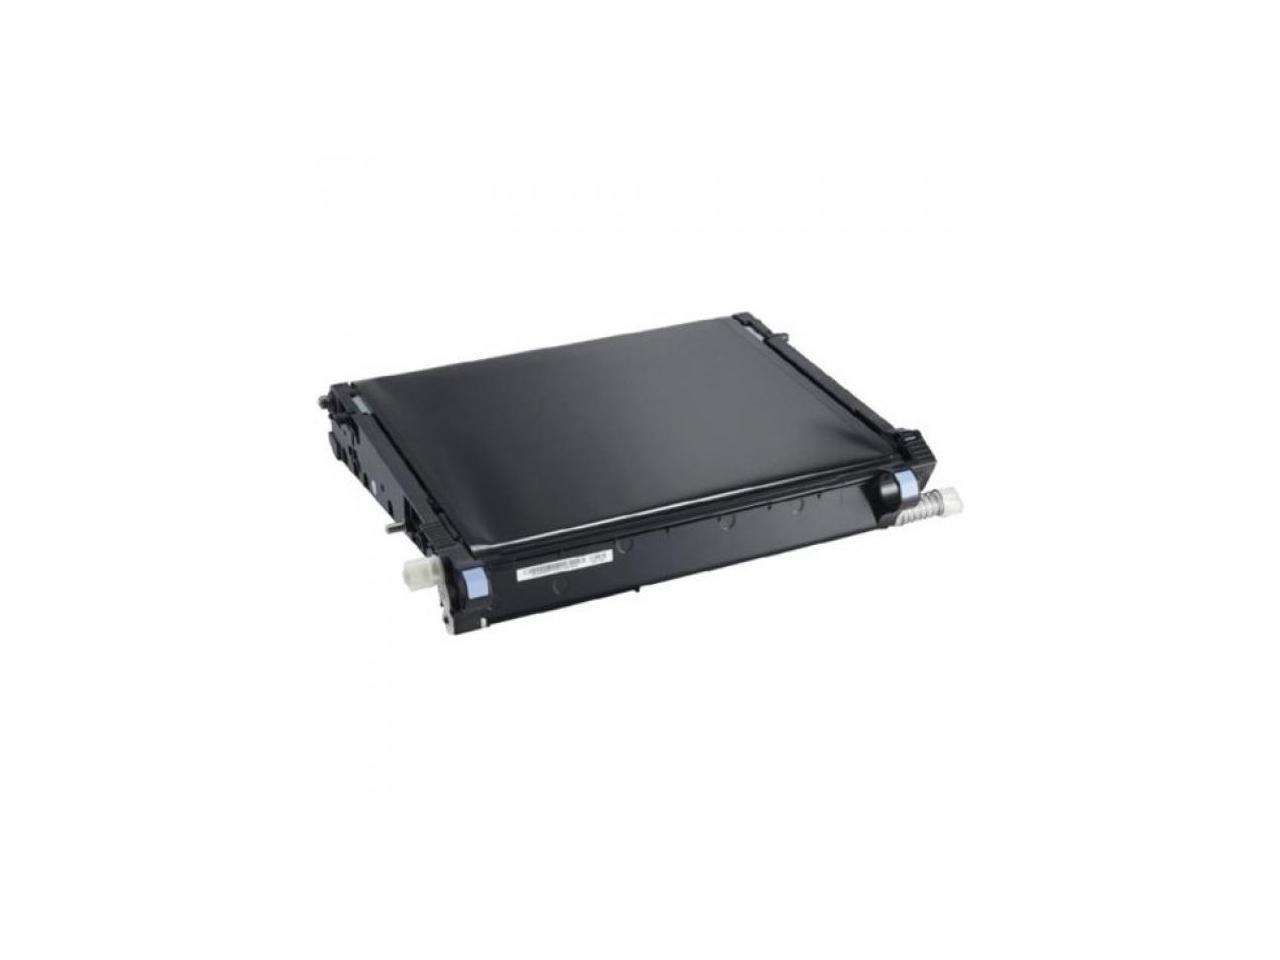 Dell 7XDTM Maintenance Kit for C3760n/ C3760dn/ C3765dnf Color Laser Printers